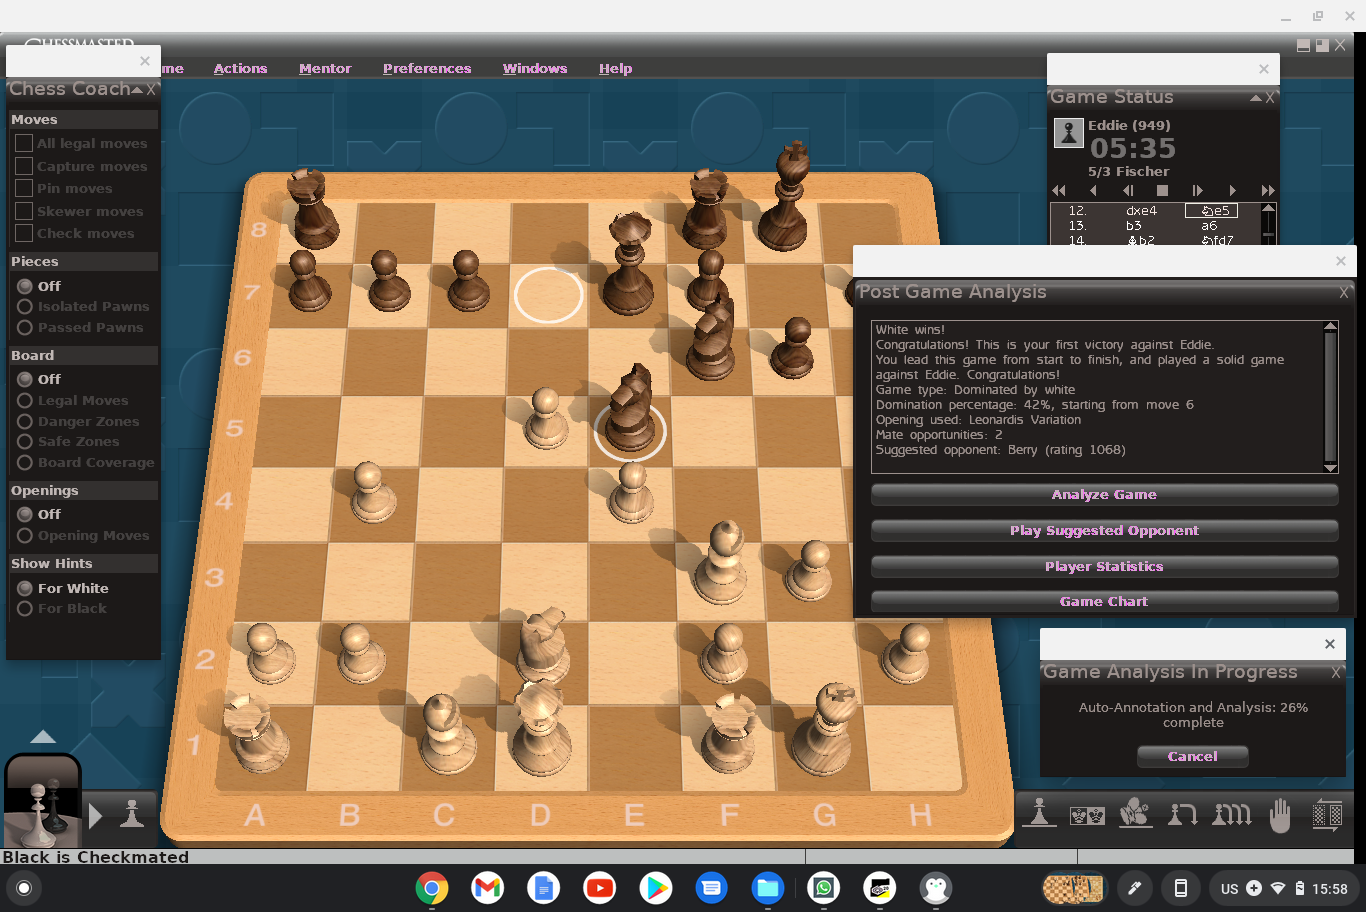 Chessmaster XI Grandmaster Edition